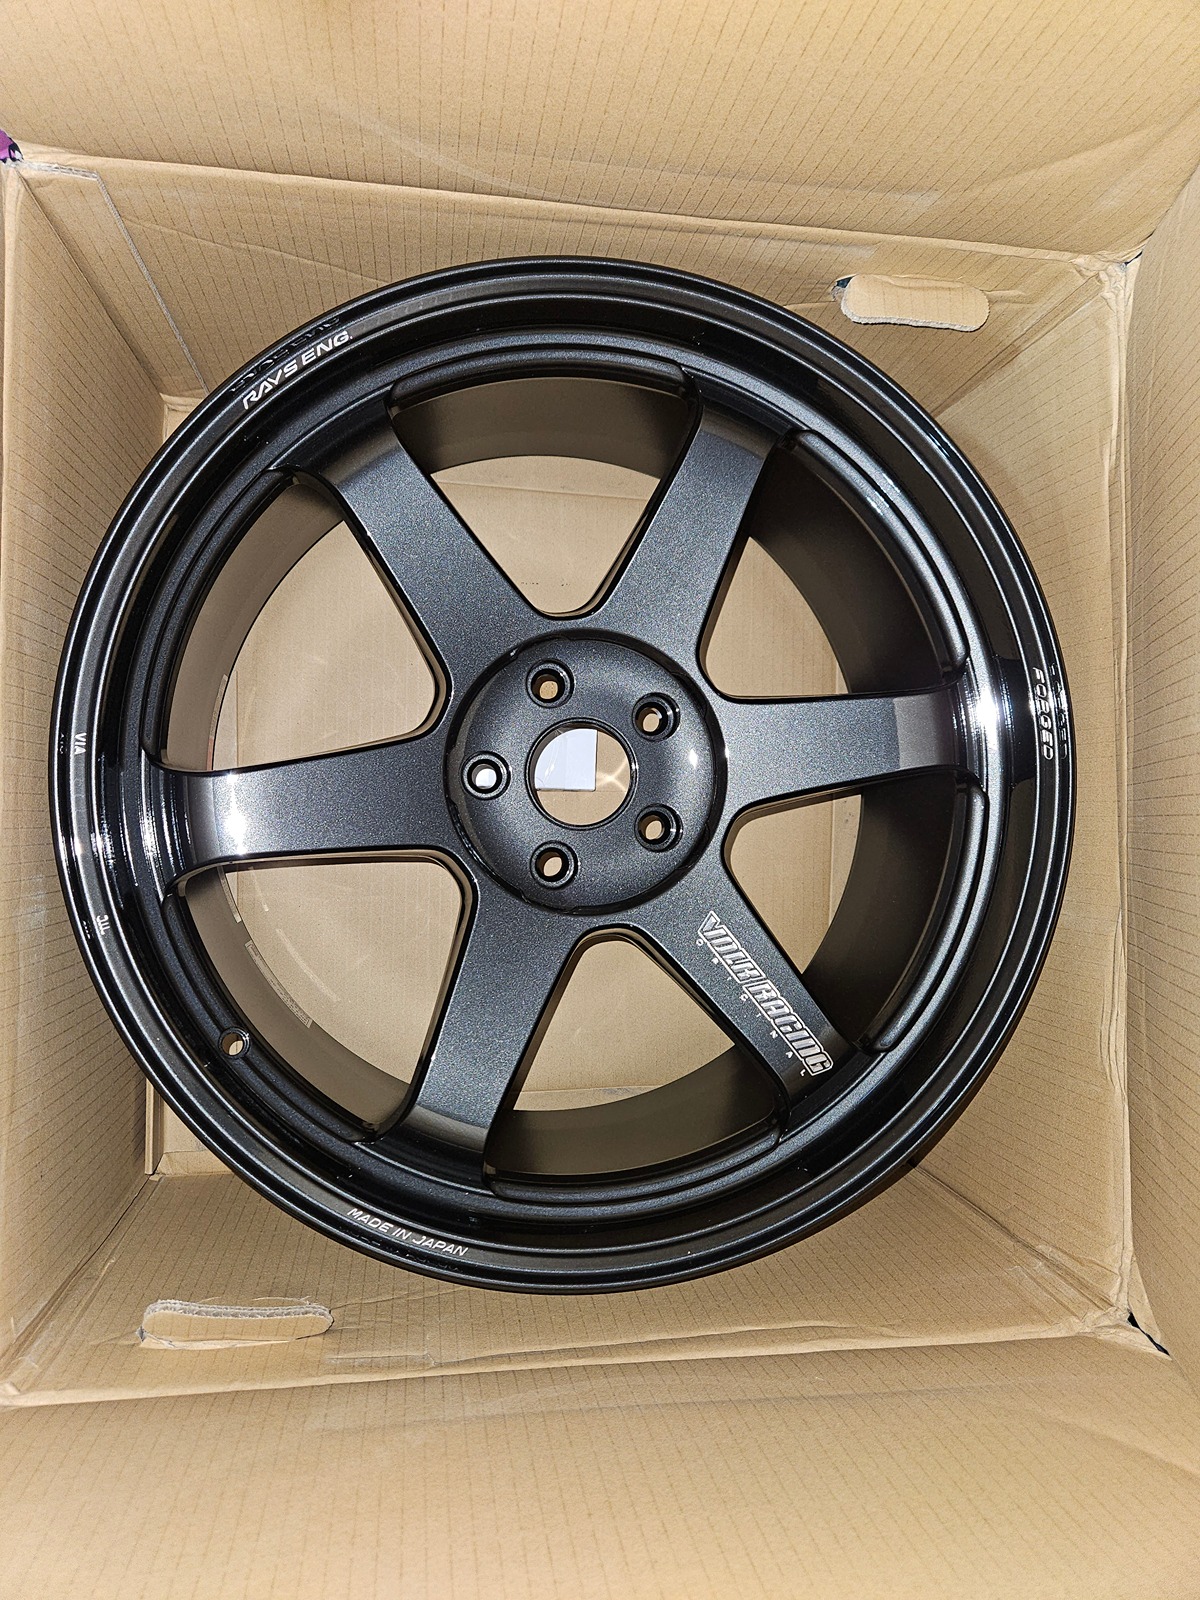 11th Gen Honda Civic Volk Racing TE37 Diamond Black wheels 20x9.5 5x114.3 et 36, set of 4 20240211_073735